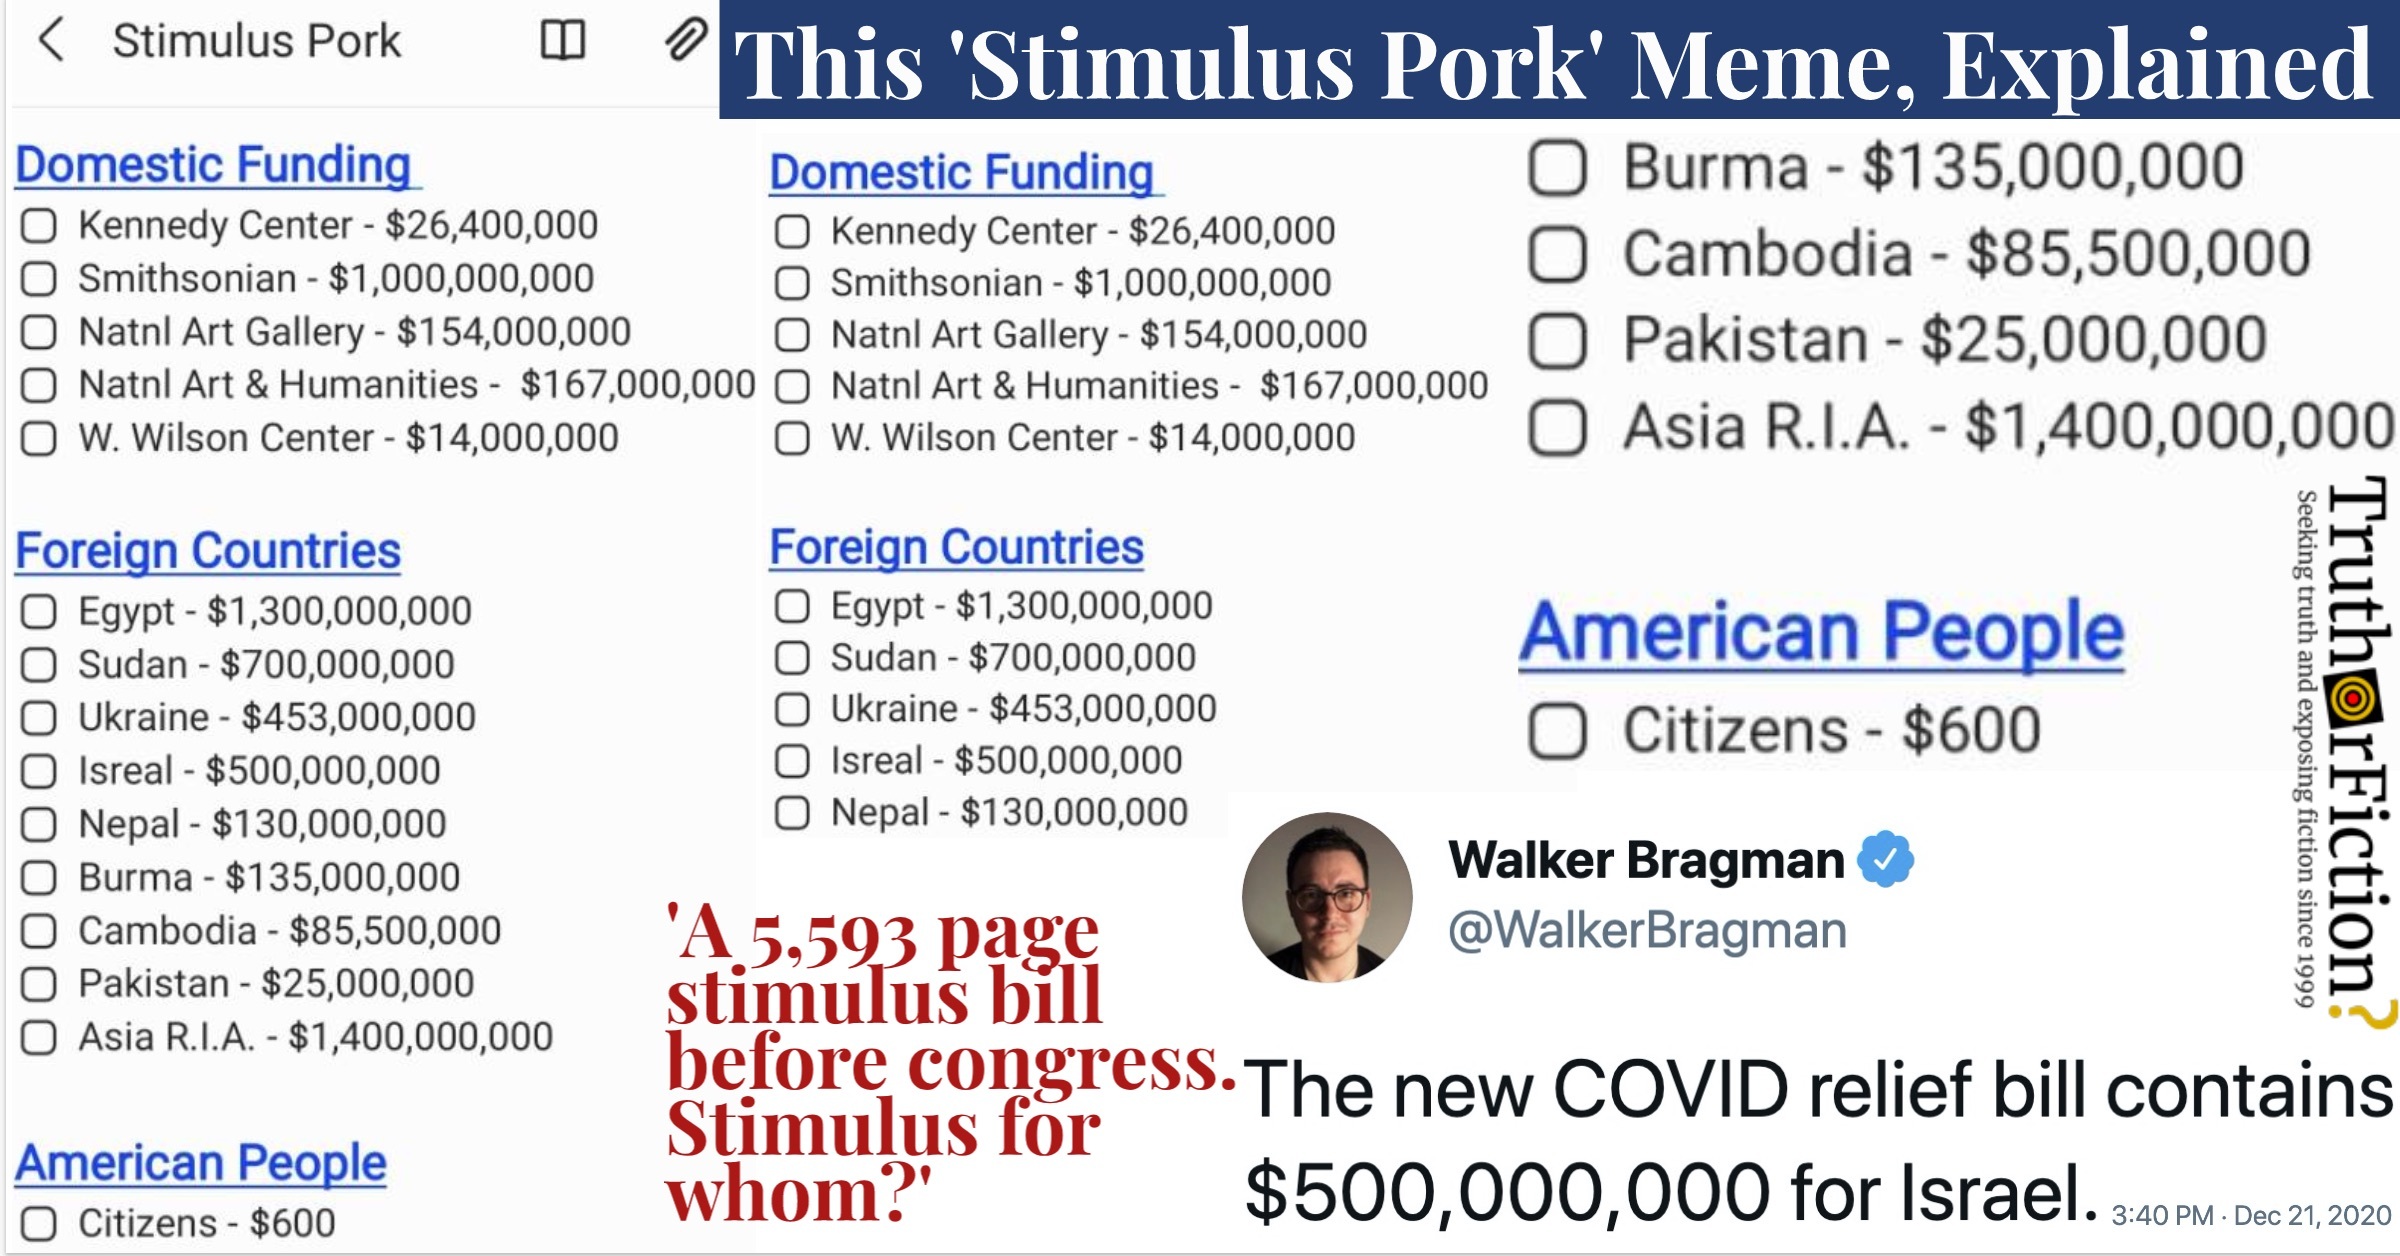 ‘Stimulus Pork’